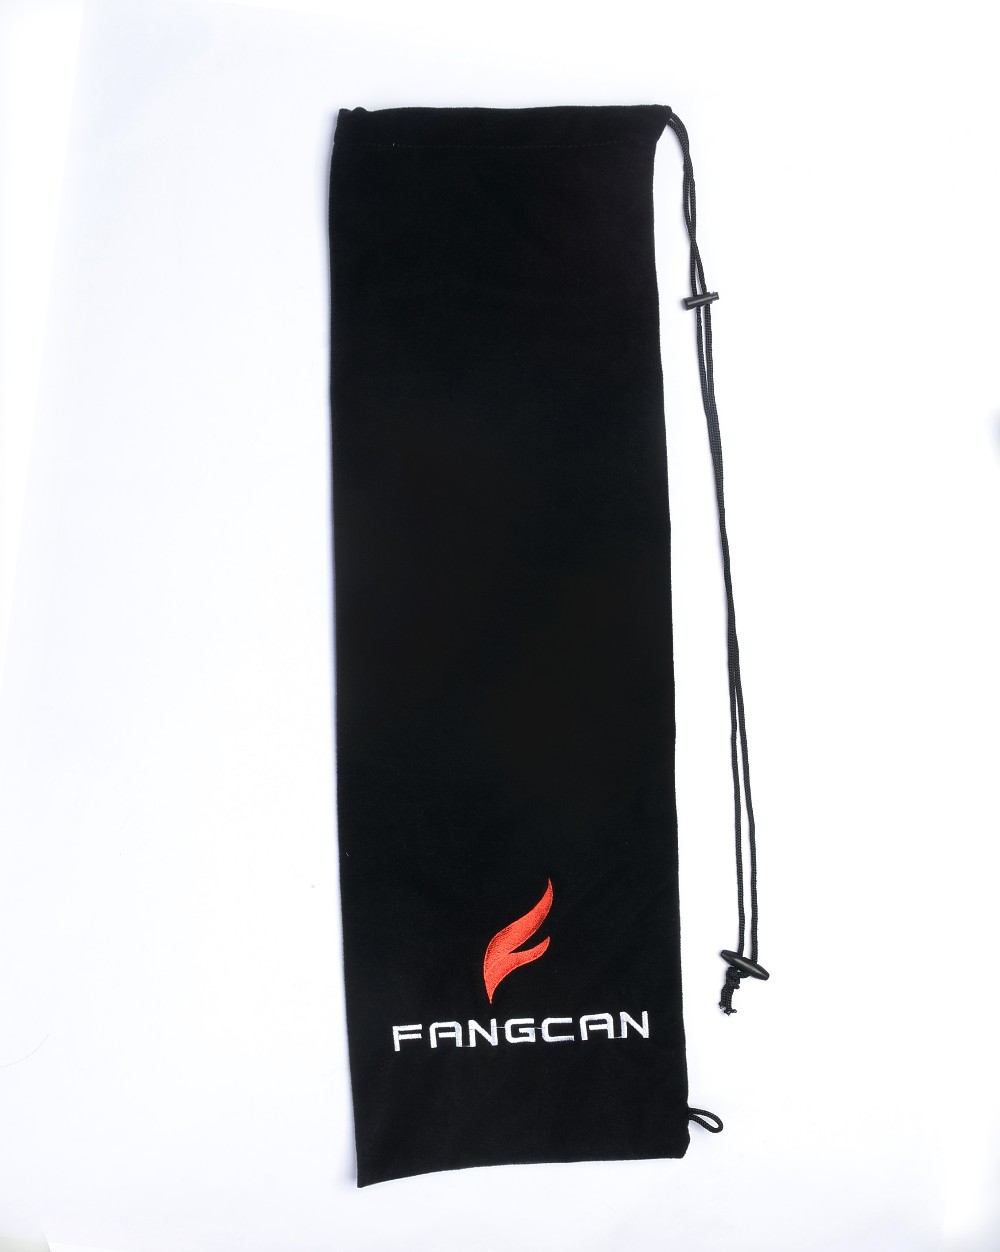 1-pc-FANGCAN-FCBC-06-Flannel-Badminton-Racket-Bag-for-1-2-Piece-Badminton-Racket-Black-Color-1000001824155